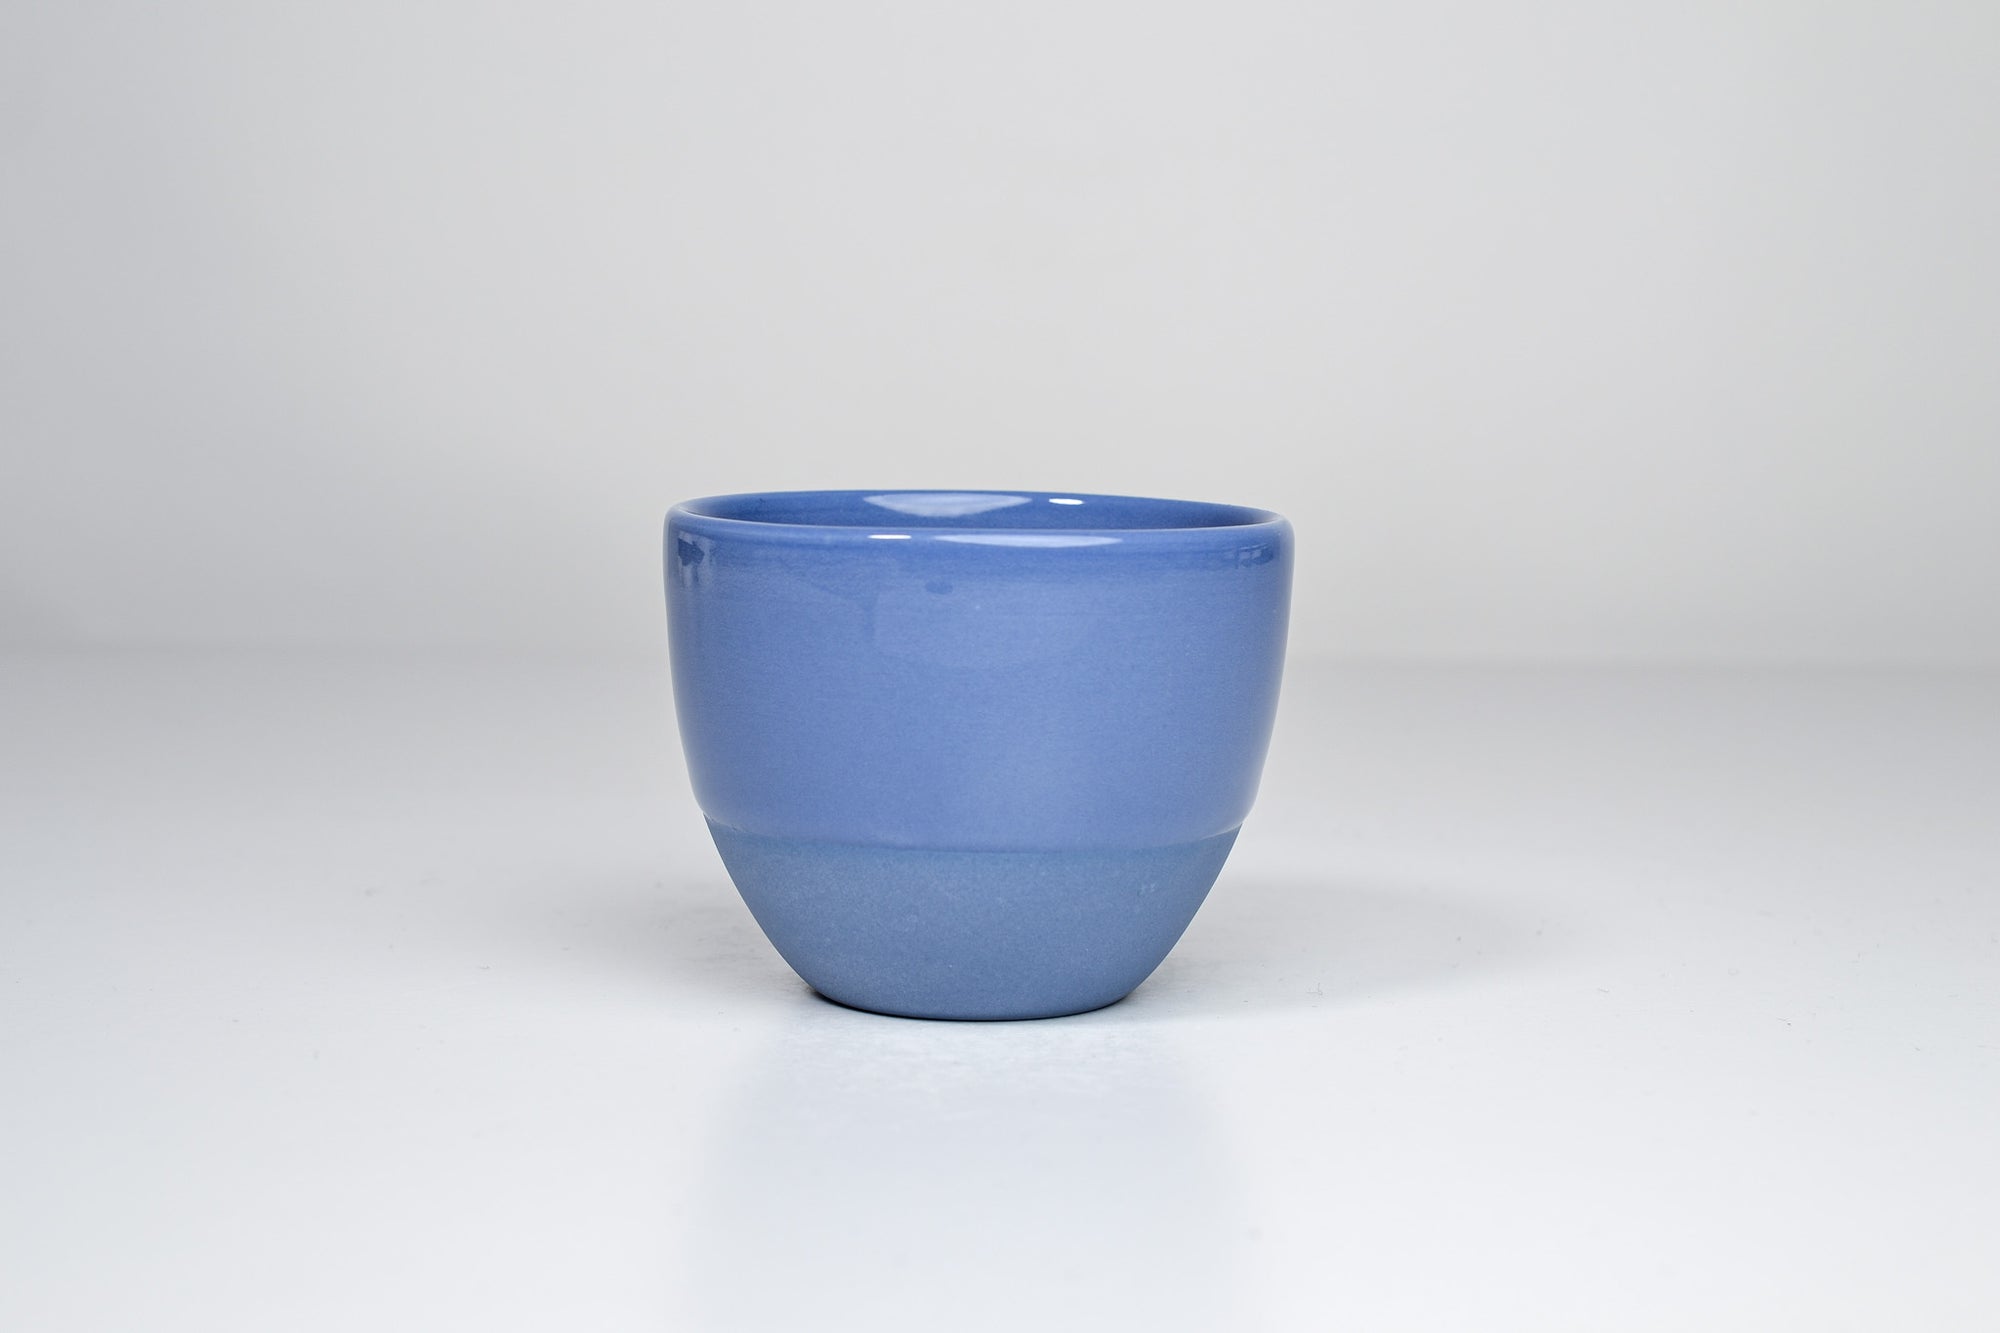 Simple cobalt blue cup